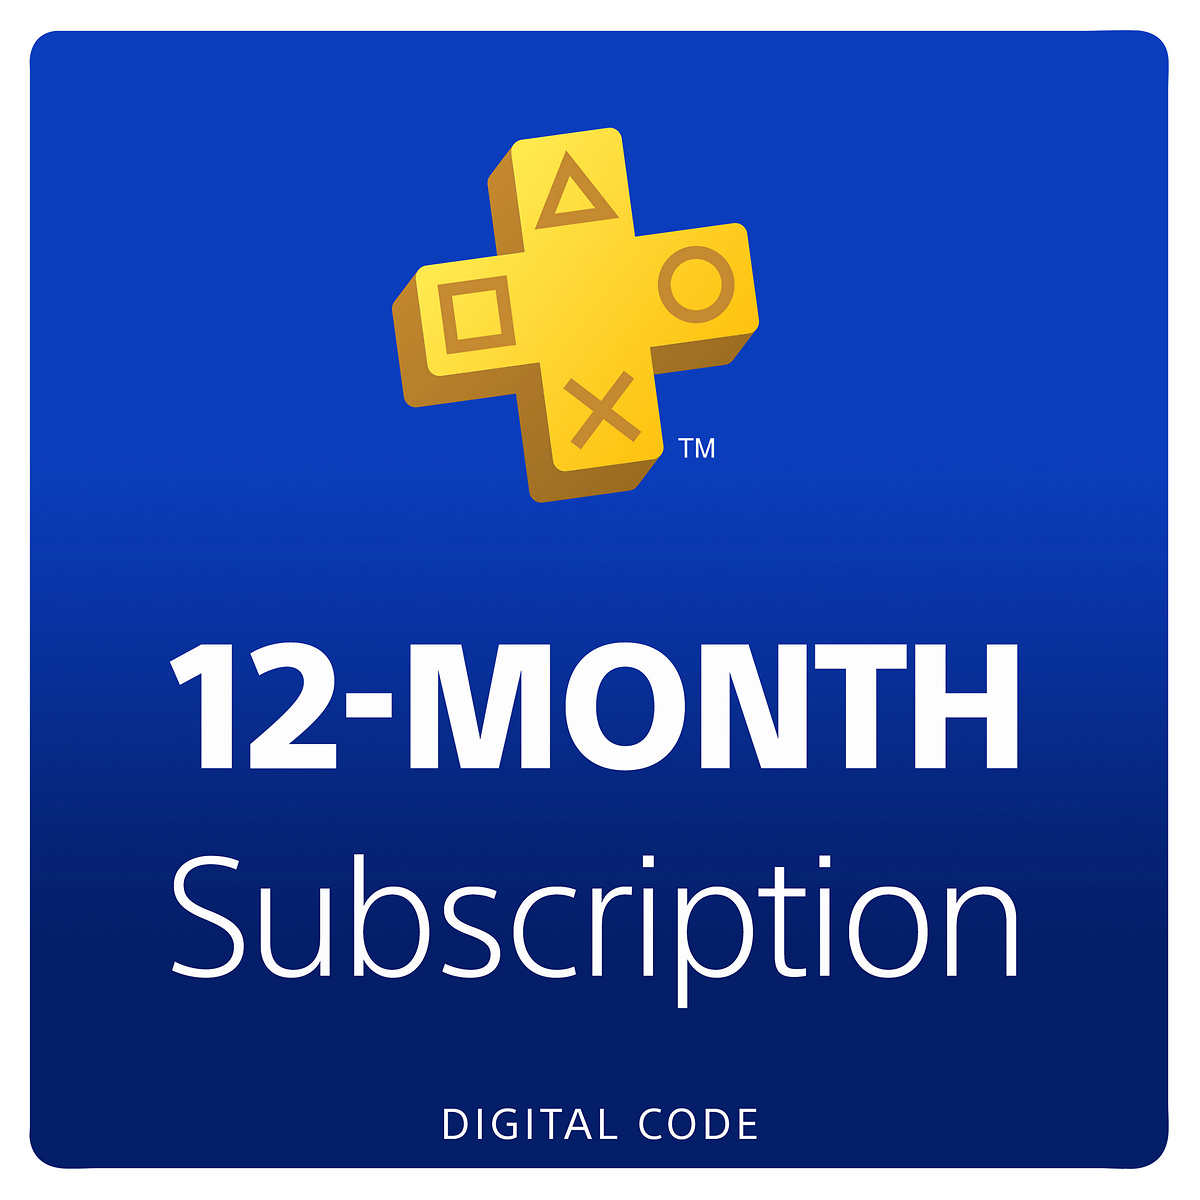 12 Months of PS Plus (Digital Code)